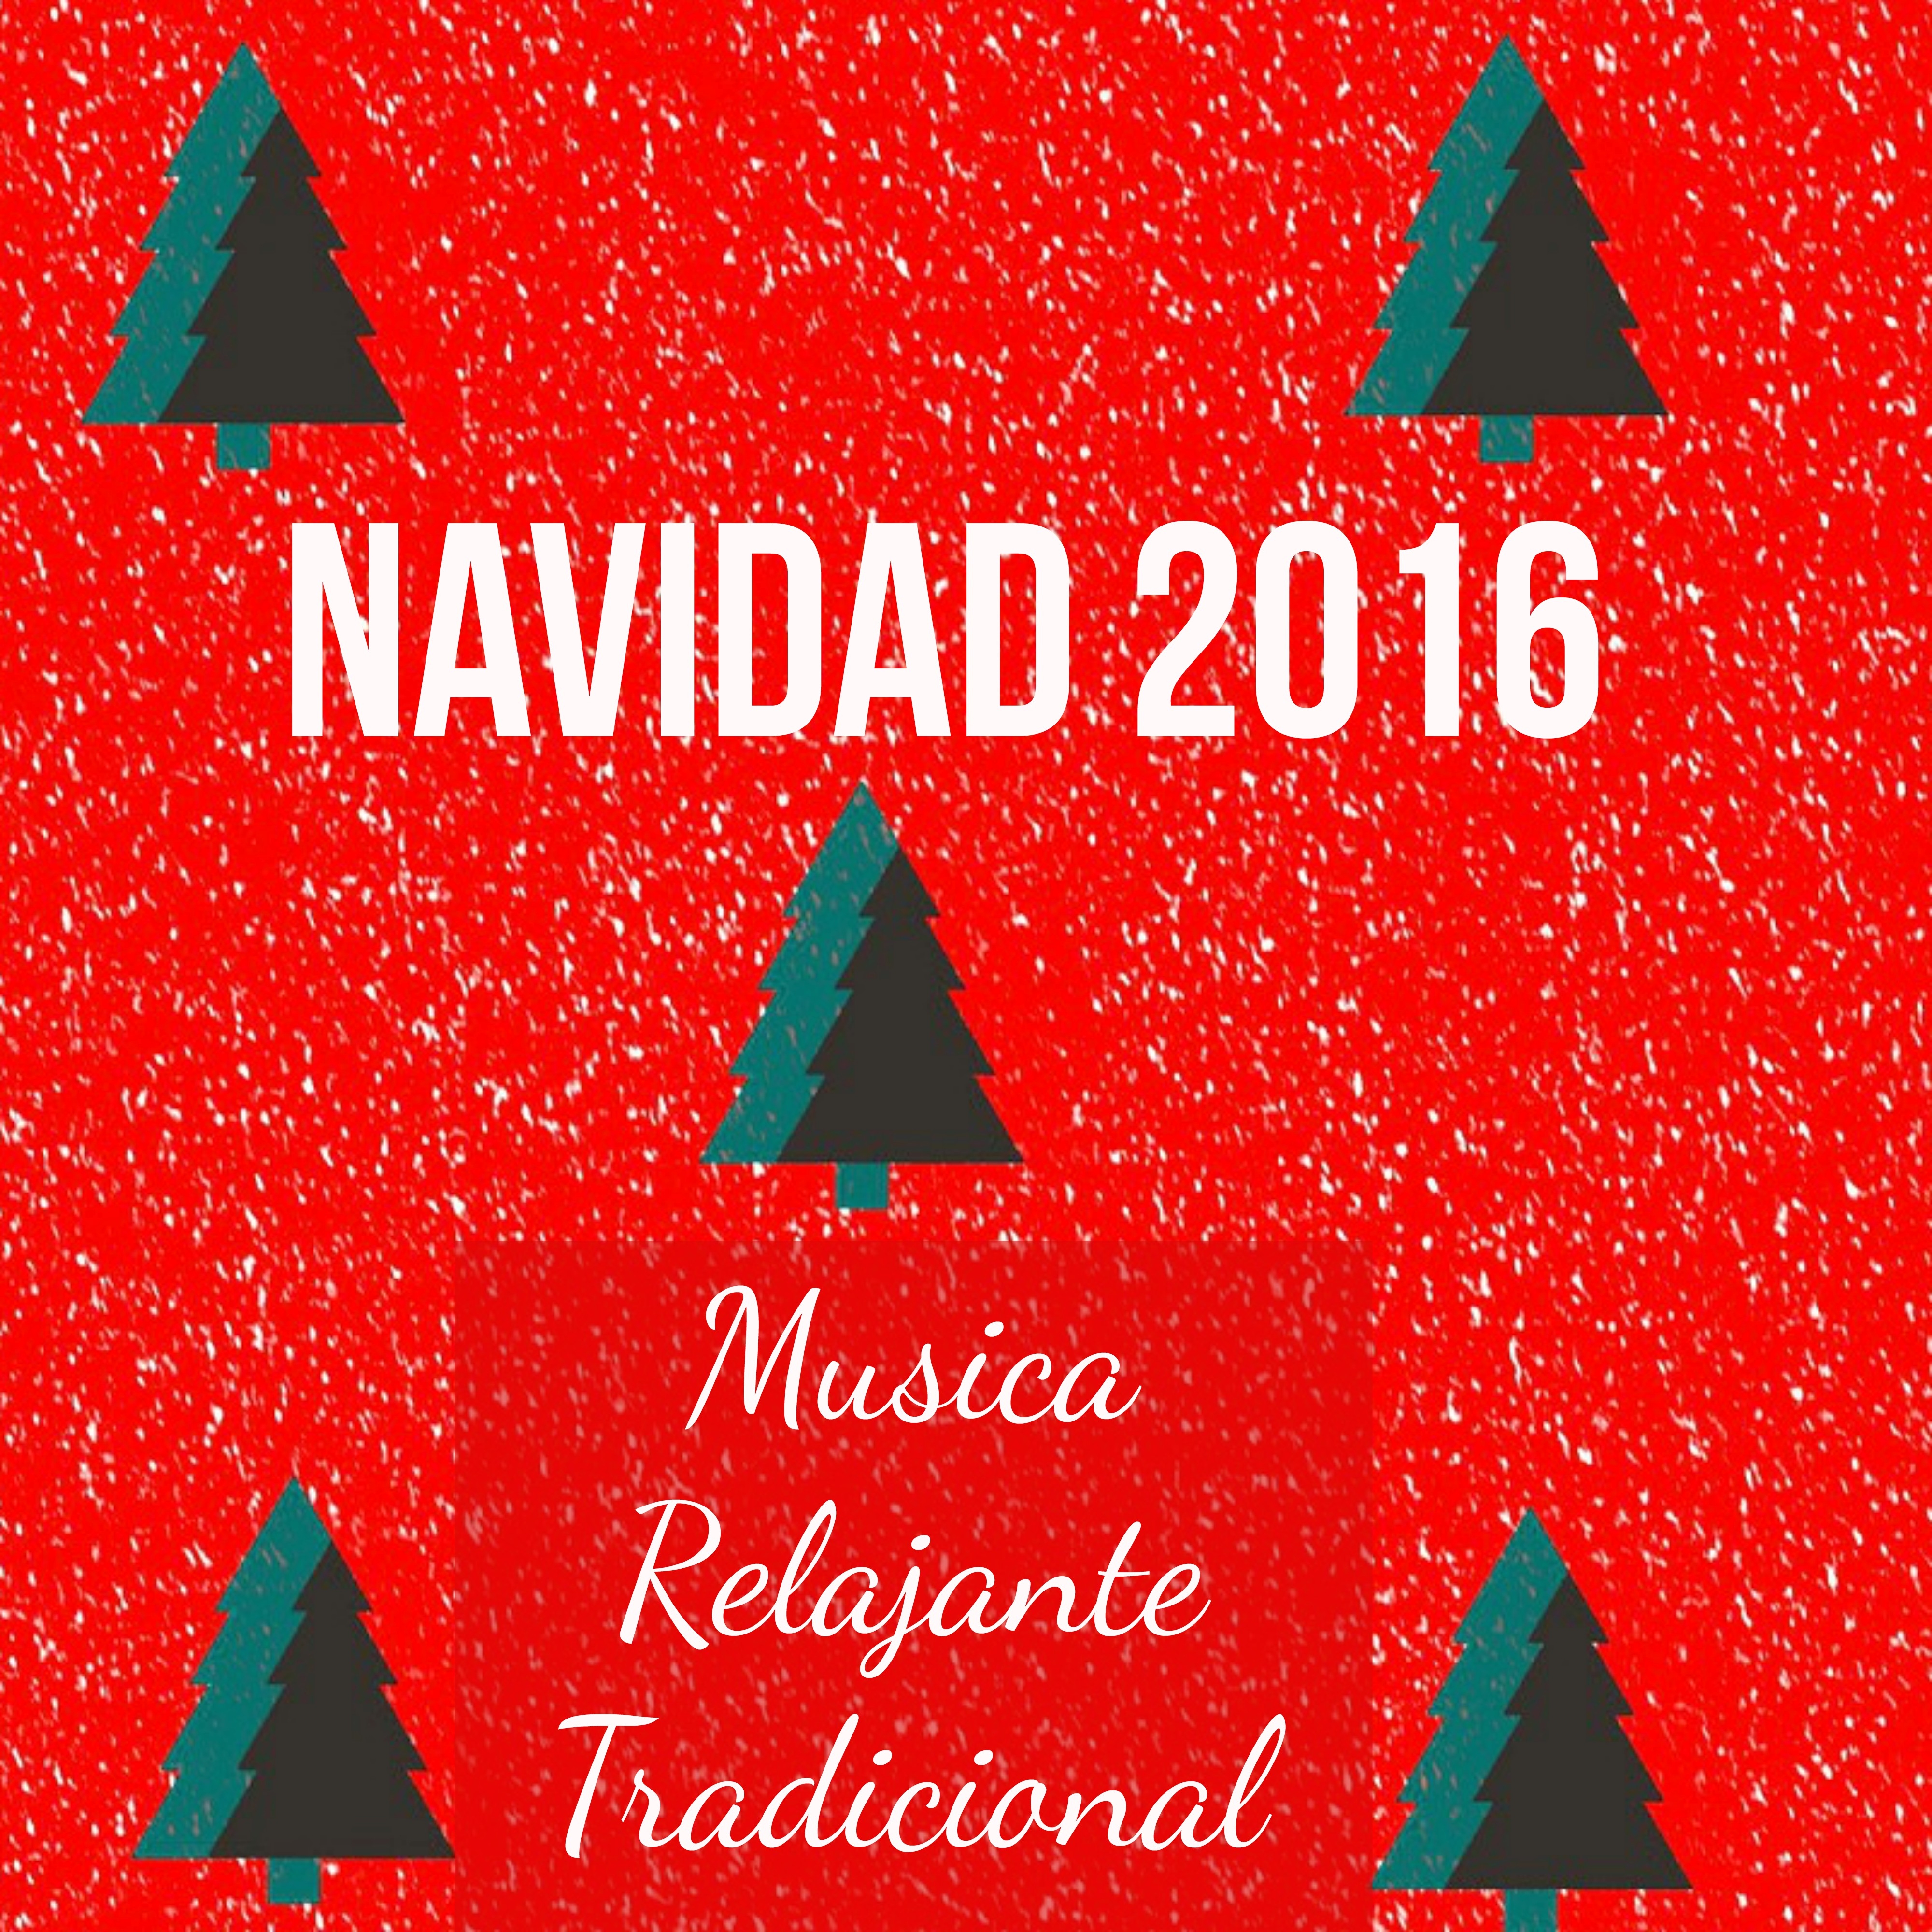 Navidad 2016  Musica Relajante Tradicional para Di as Festivos Dulce Navidad Mantener la Calma